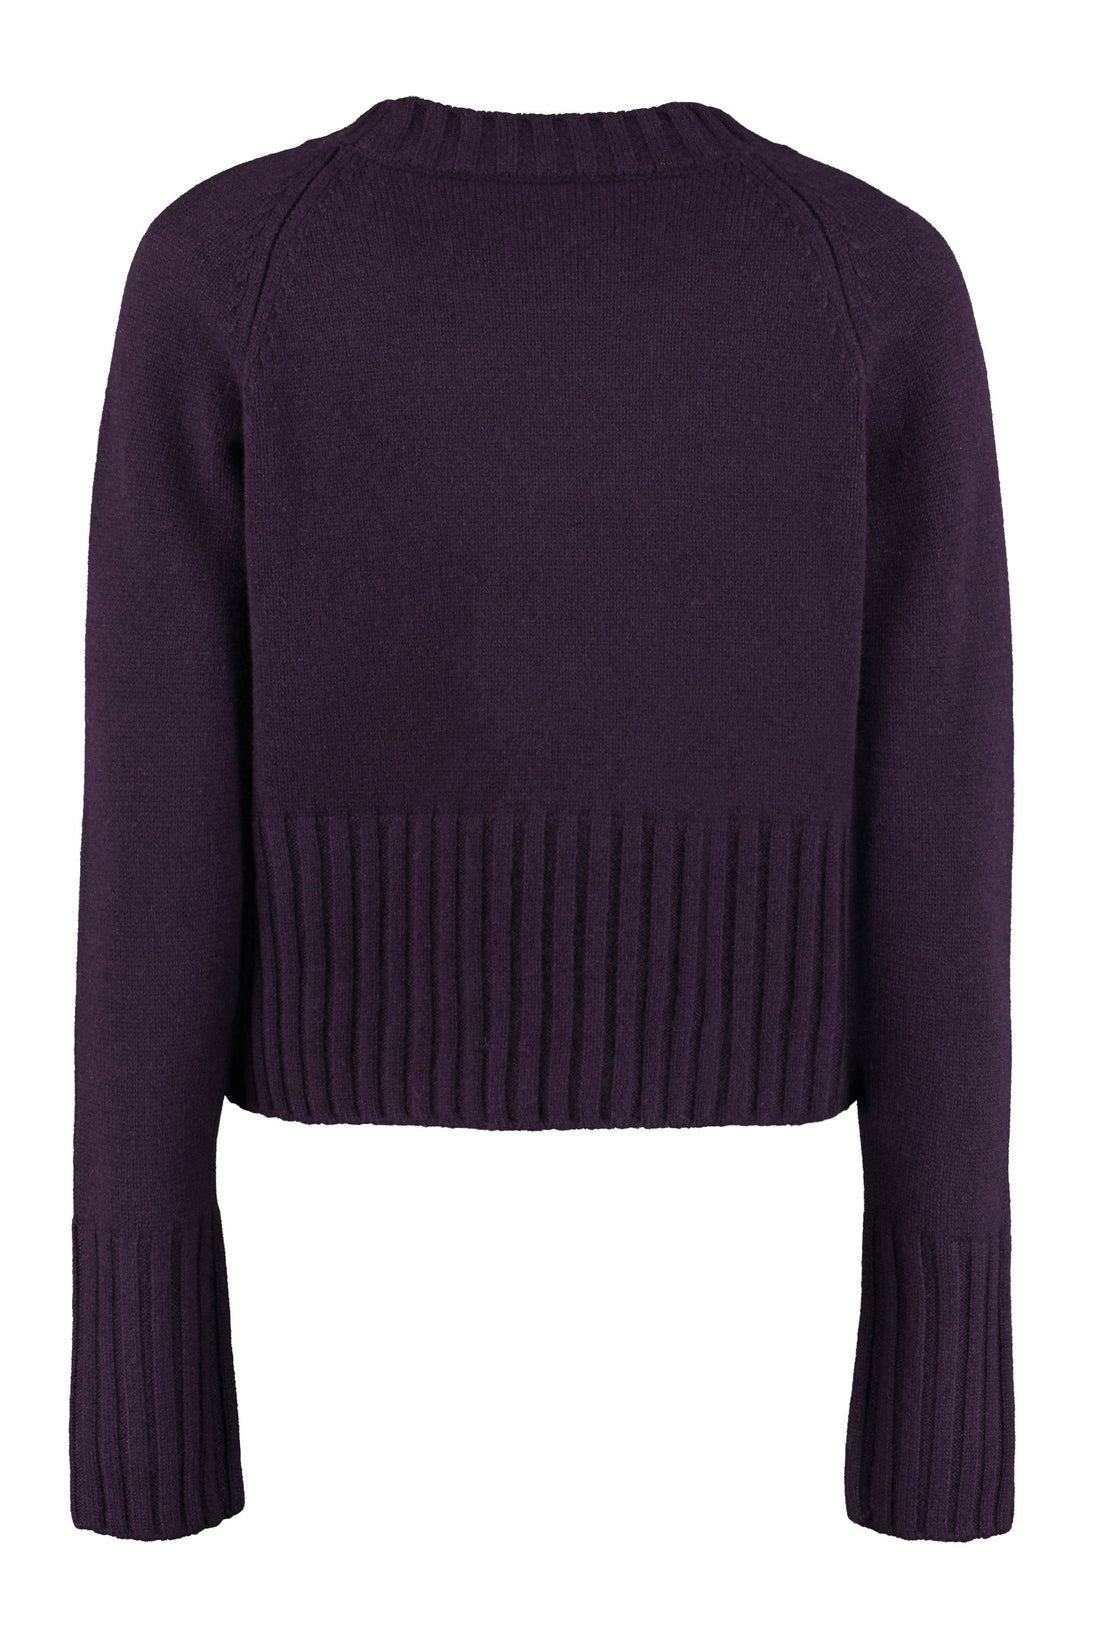 Parosh-OUTLET-SALE-Logan wool and cashmere sweater-ARCHIVIST